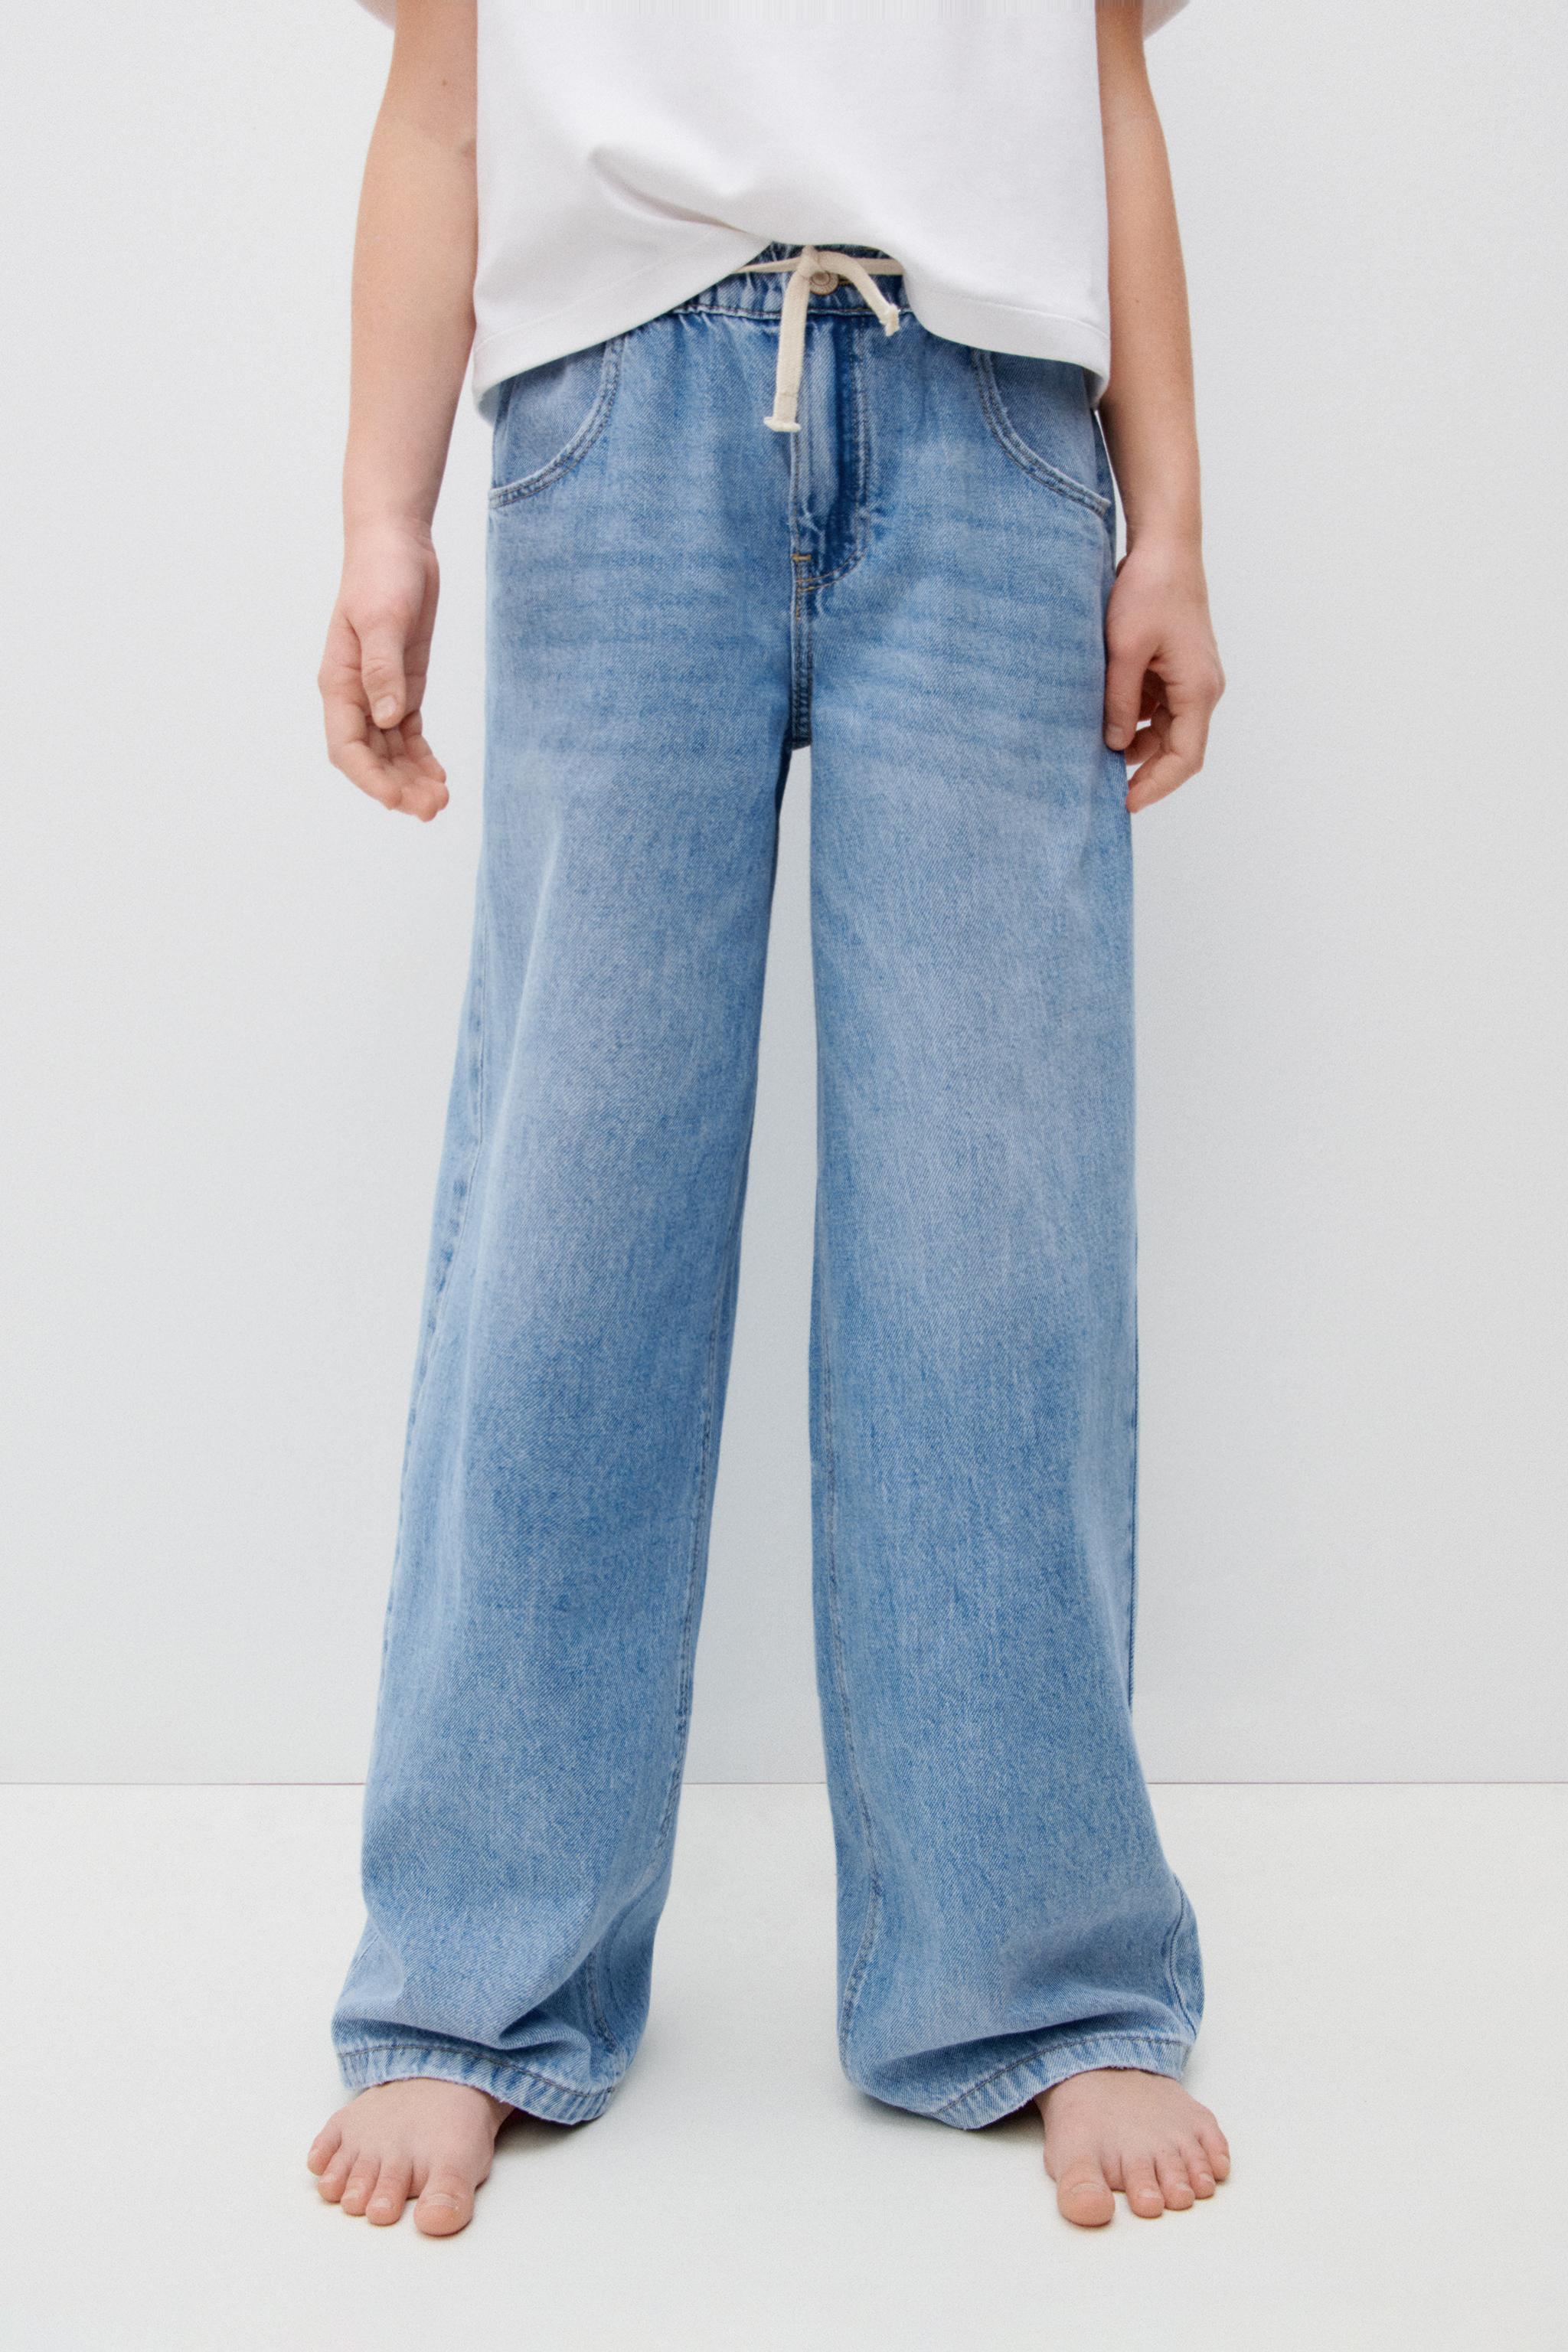 Zara, Jeans, Zara 9s Wide Leg White Snake Print Pants Jeans High Waist  Python Size 4